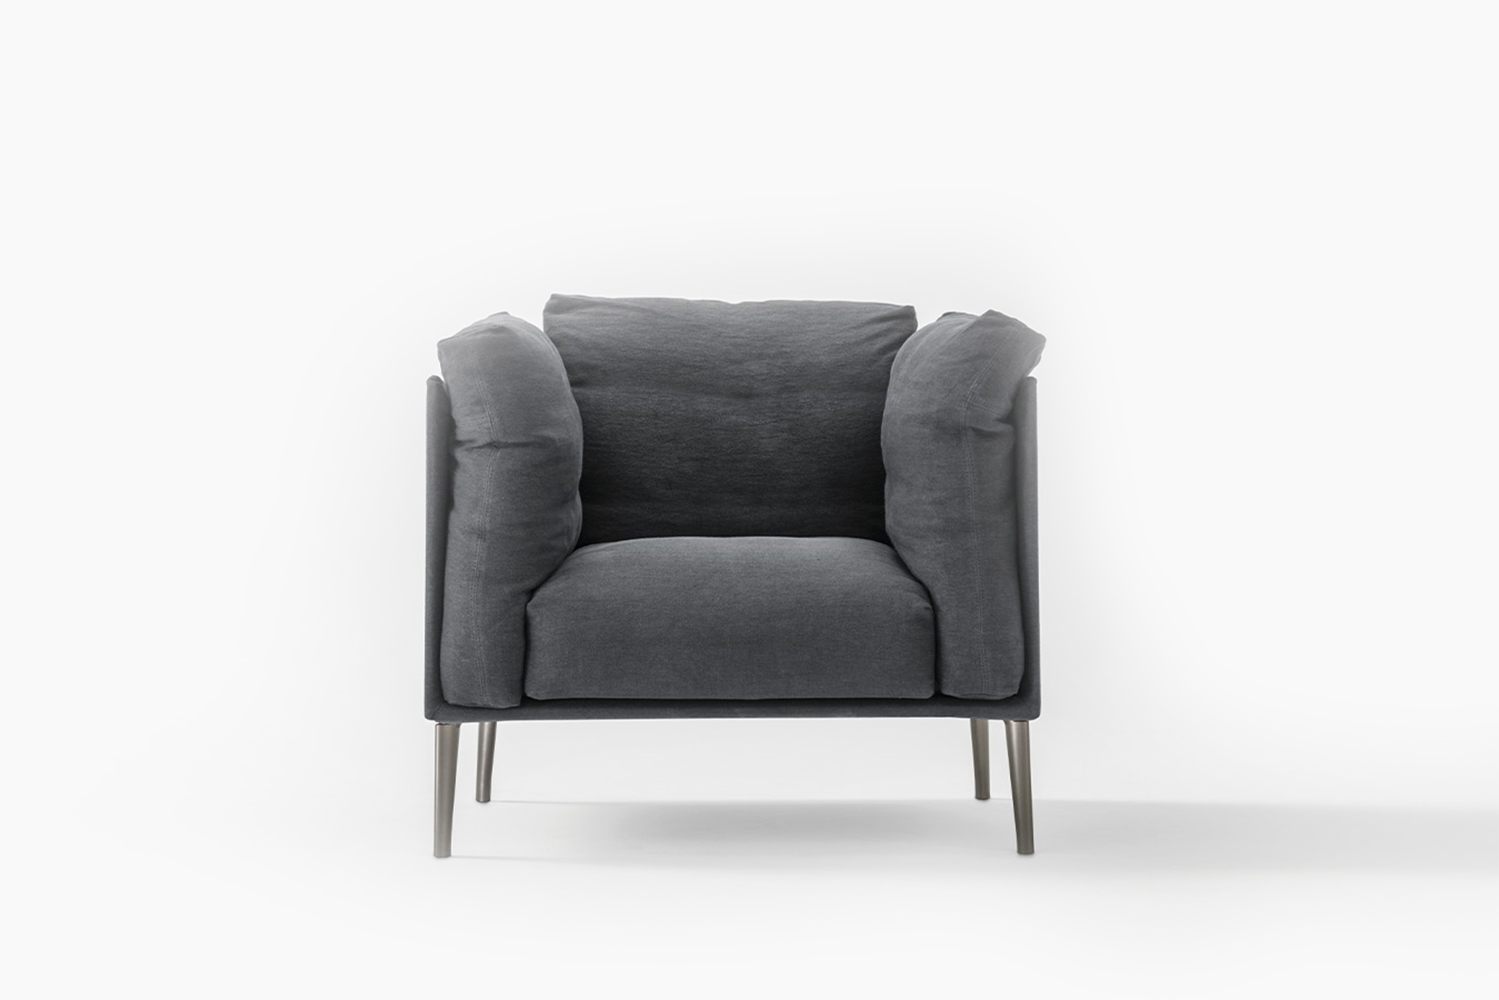 Kubi luxury Italian modern armchair by Novamobili. Sold by Krieder UK.